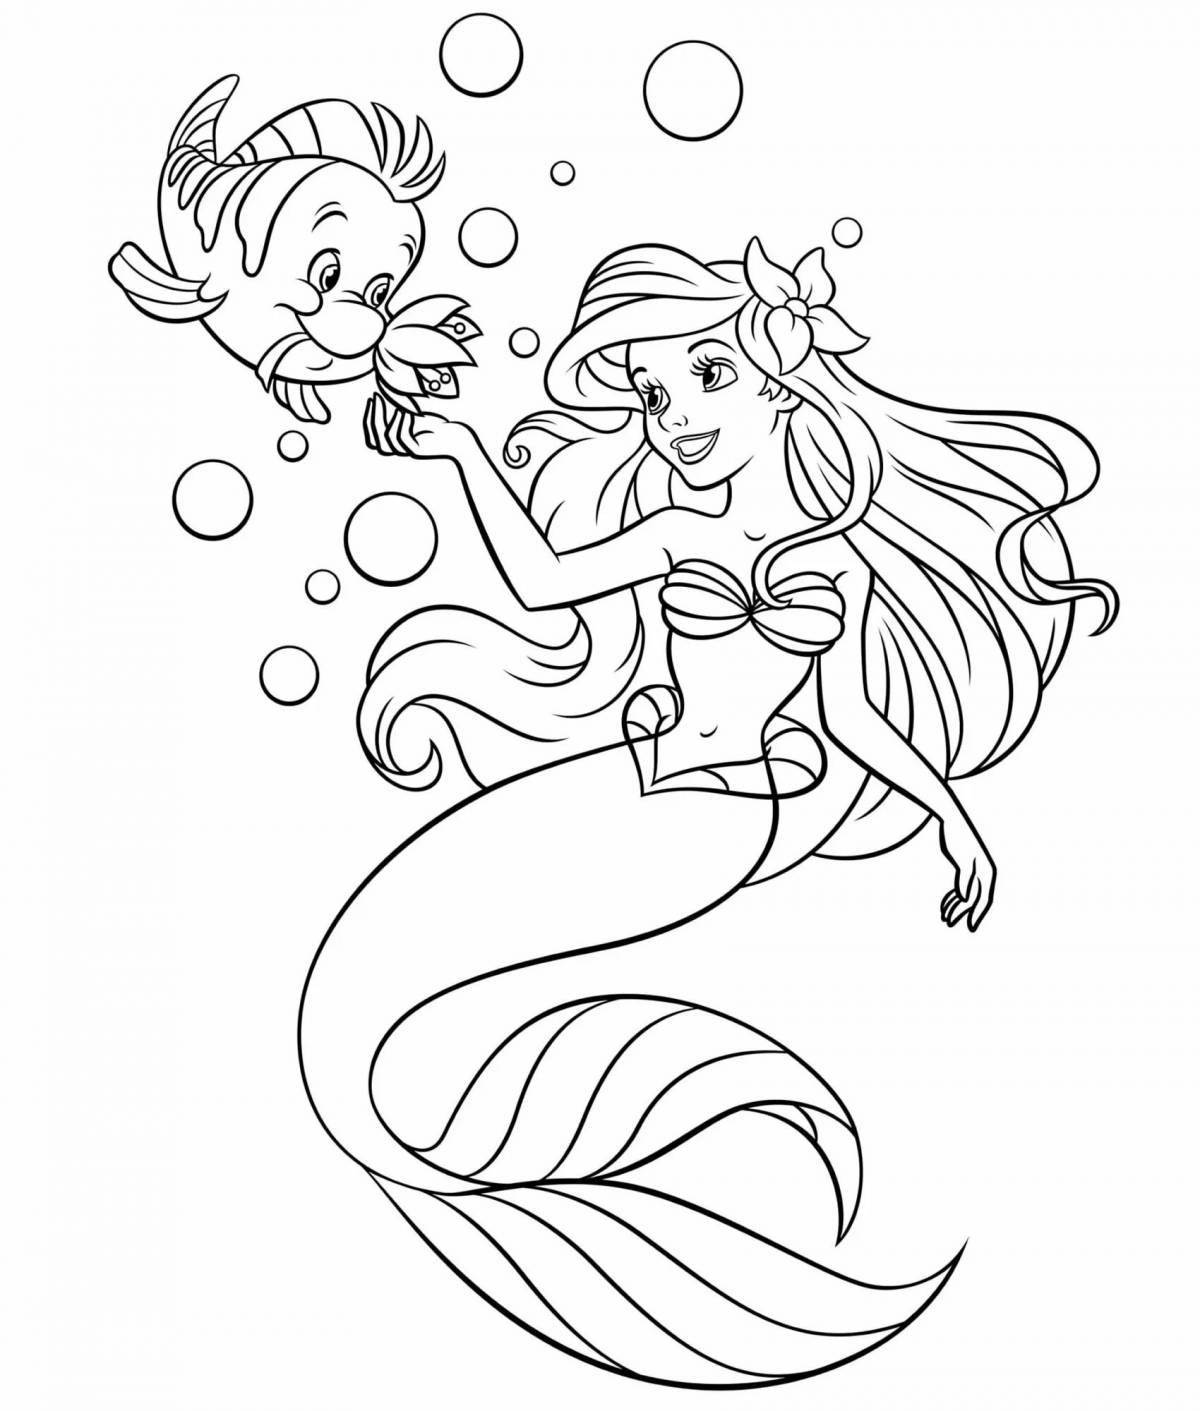 Joyful little mermaid coloring book for children 4-5 years old